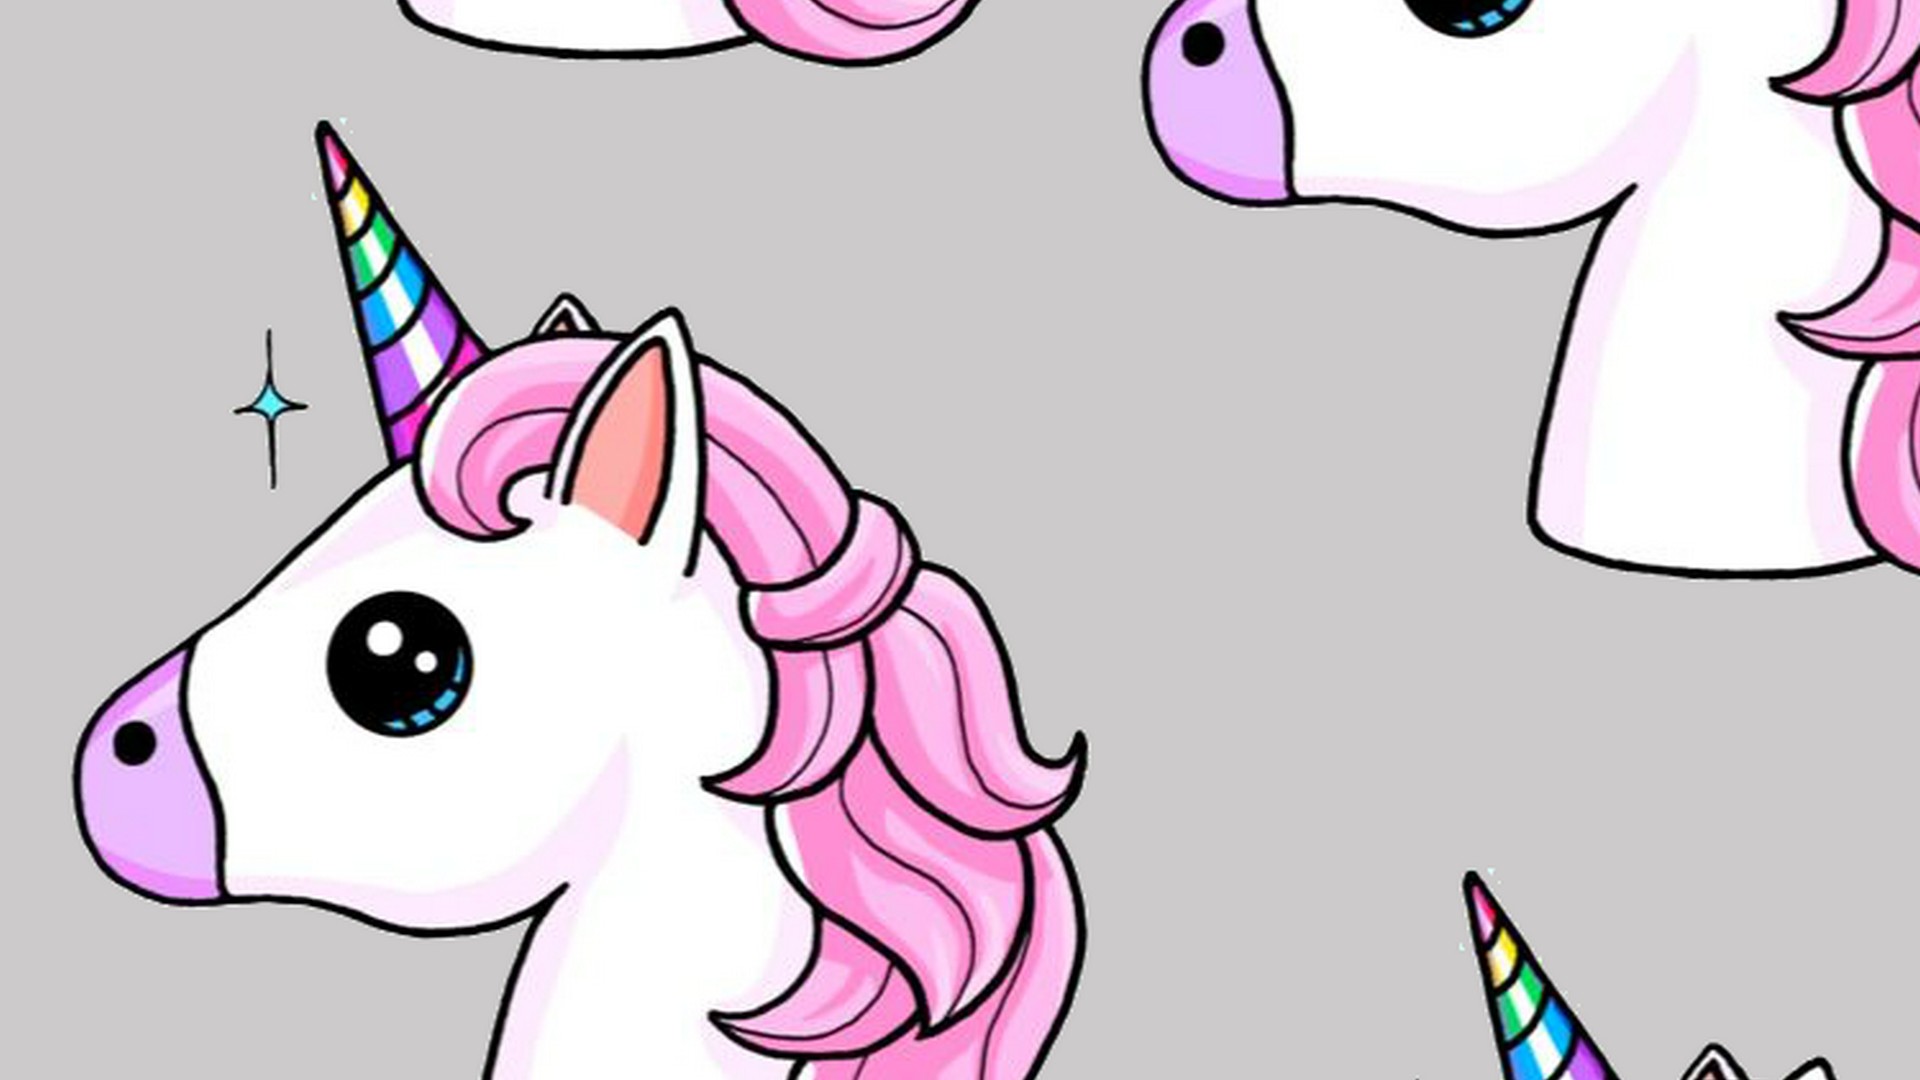 Hd Wallpaper Cute Girly Unicorn 2020 Live Wallpaper Hd